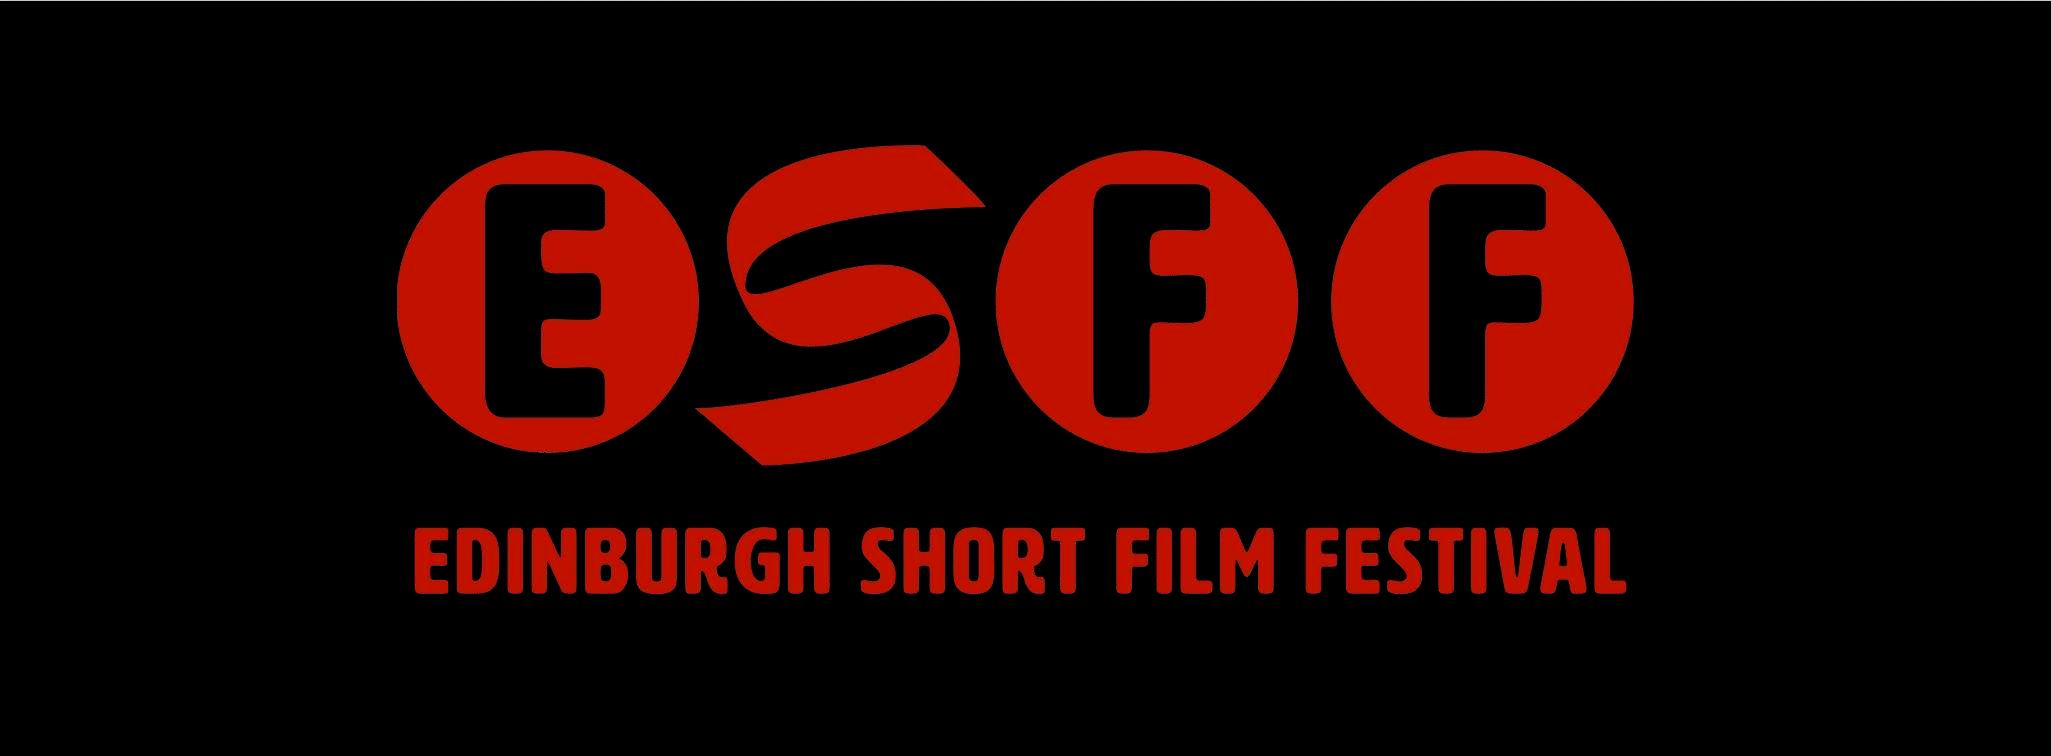 www.edinburghshortfilmfestival.com